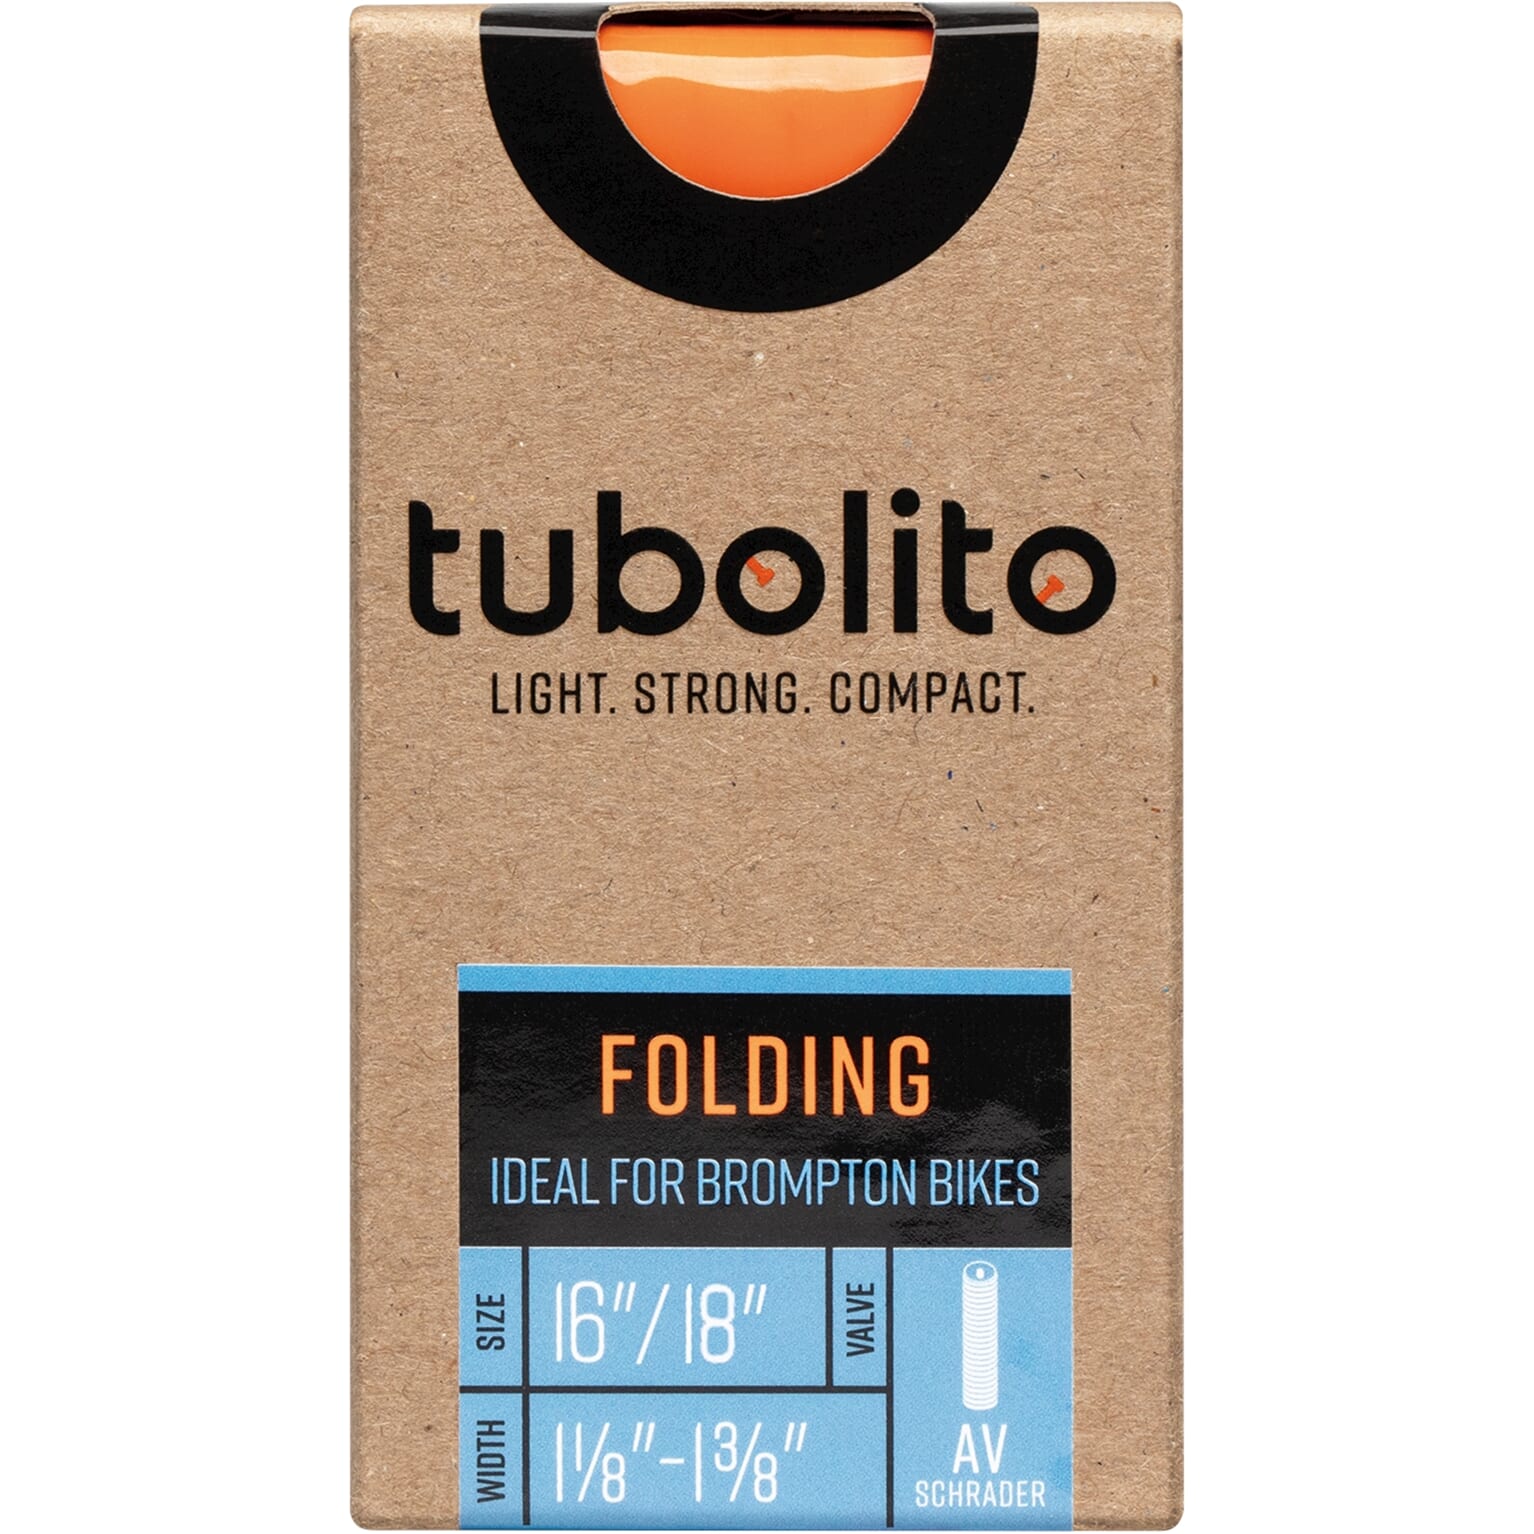 Tubolito Bnb Folding 16/18 x 1 1/8 1 3/8 av 40mm